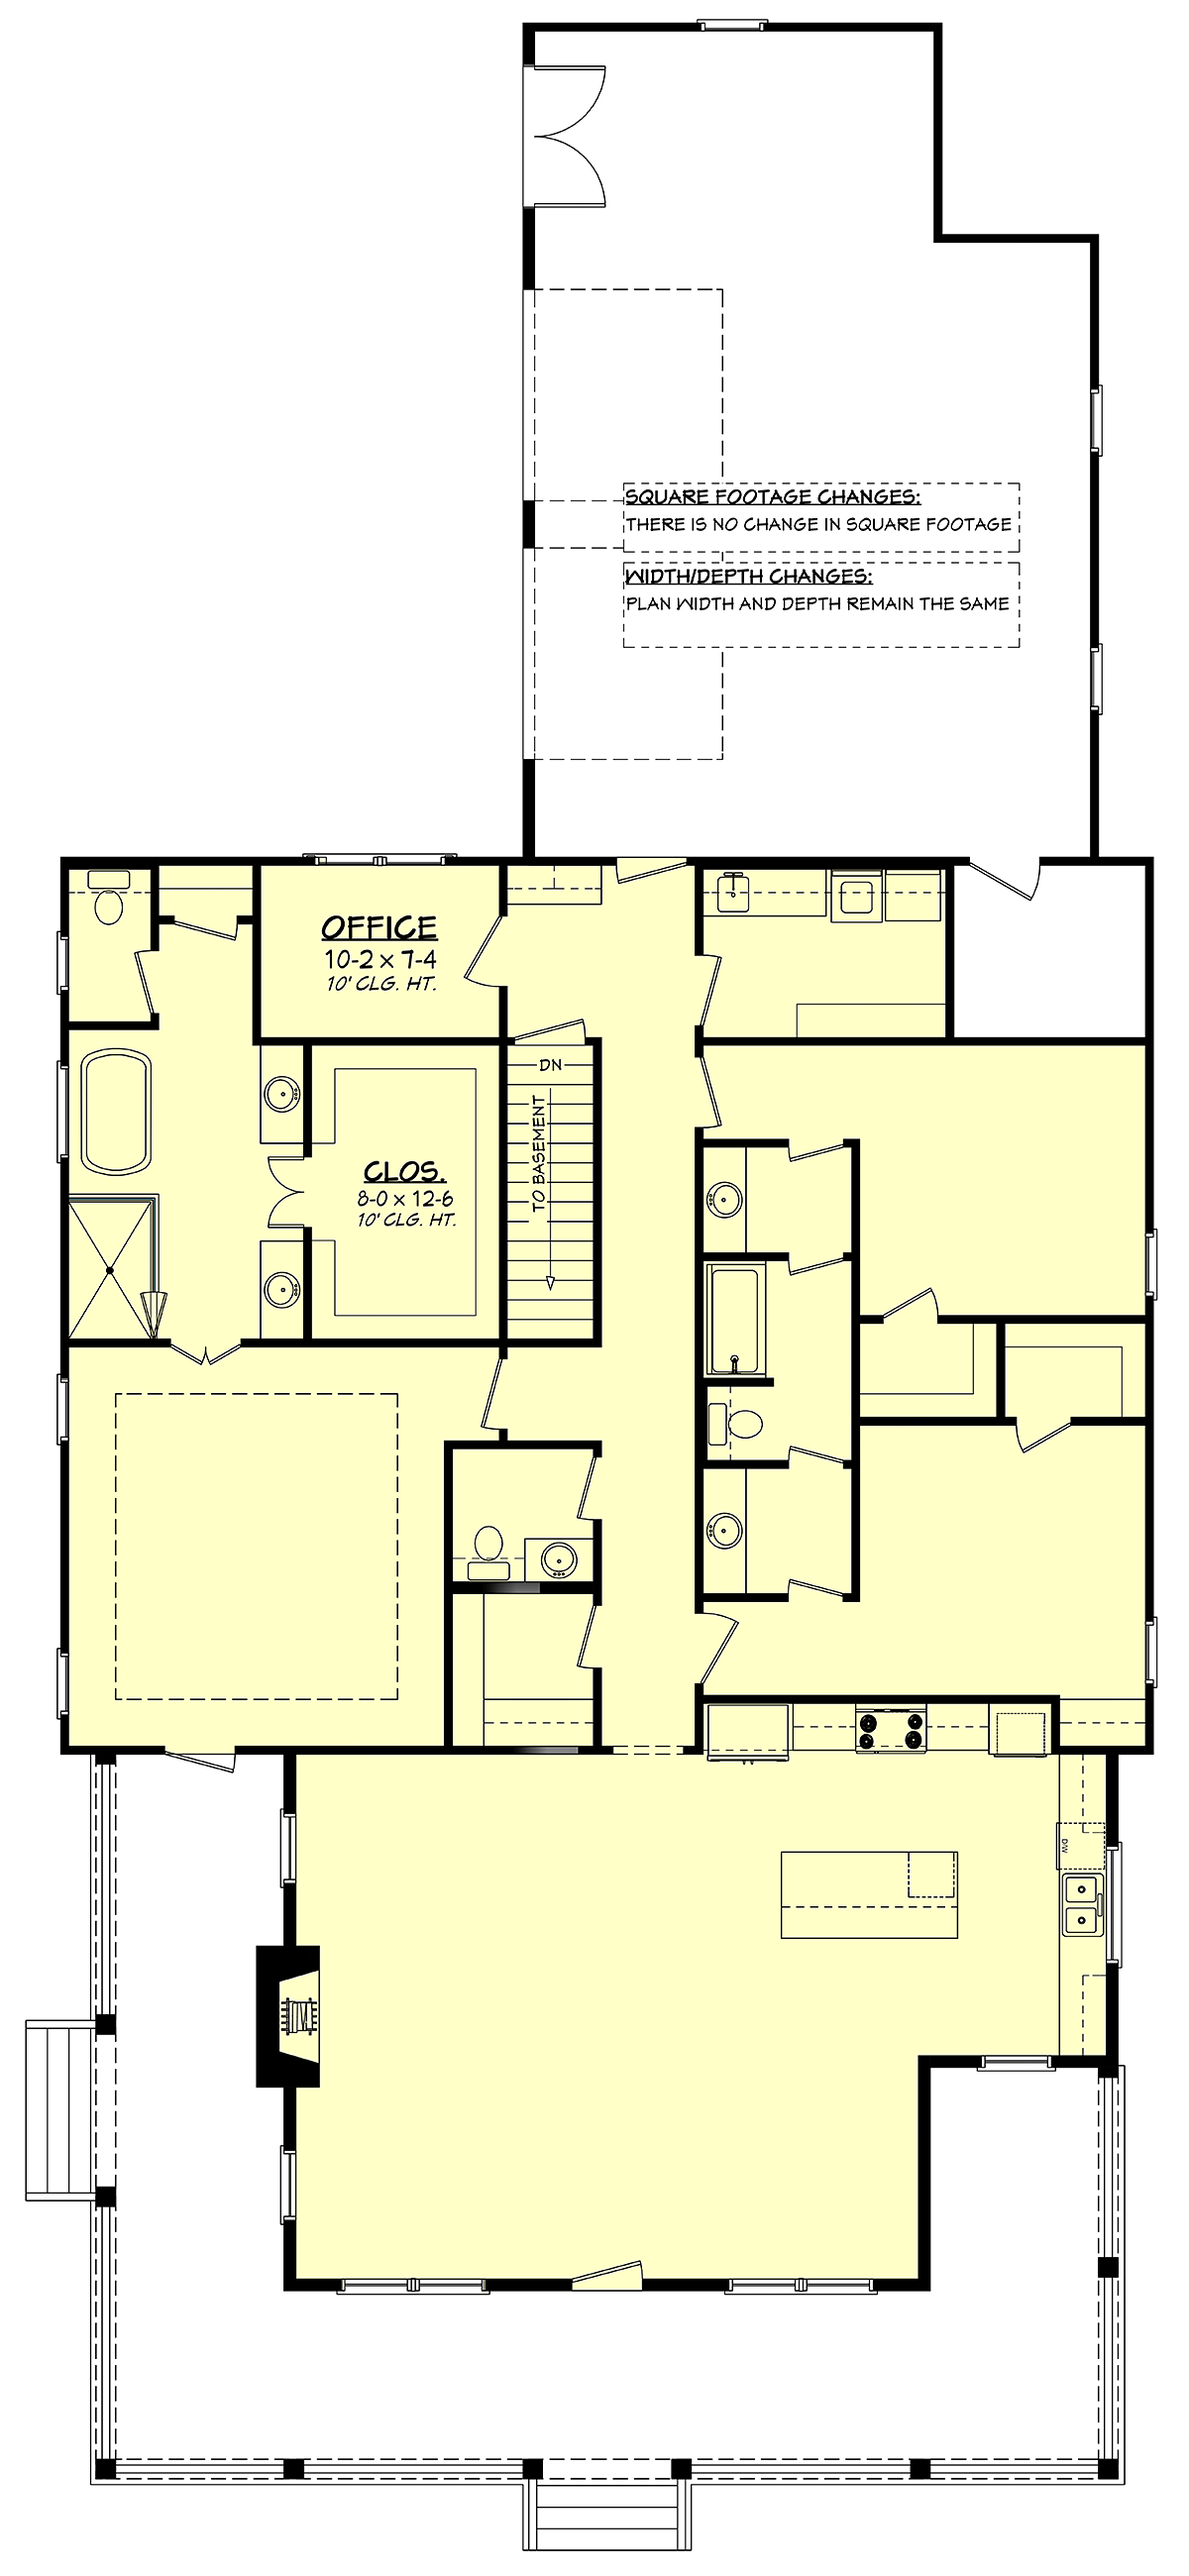 House Plan 80841 Alternate Level One